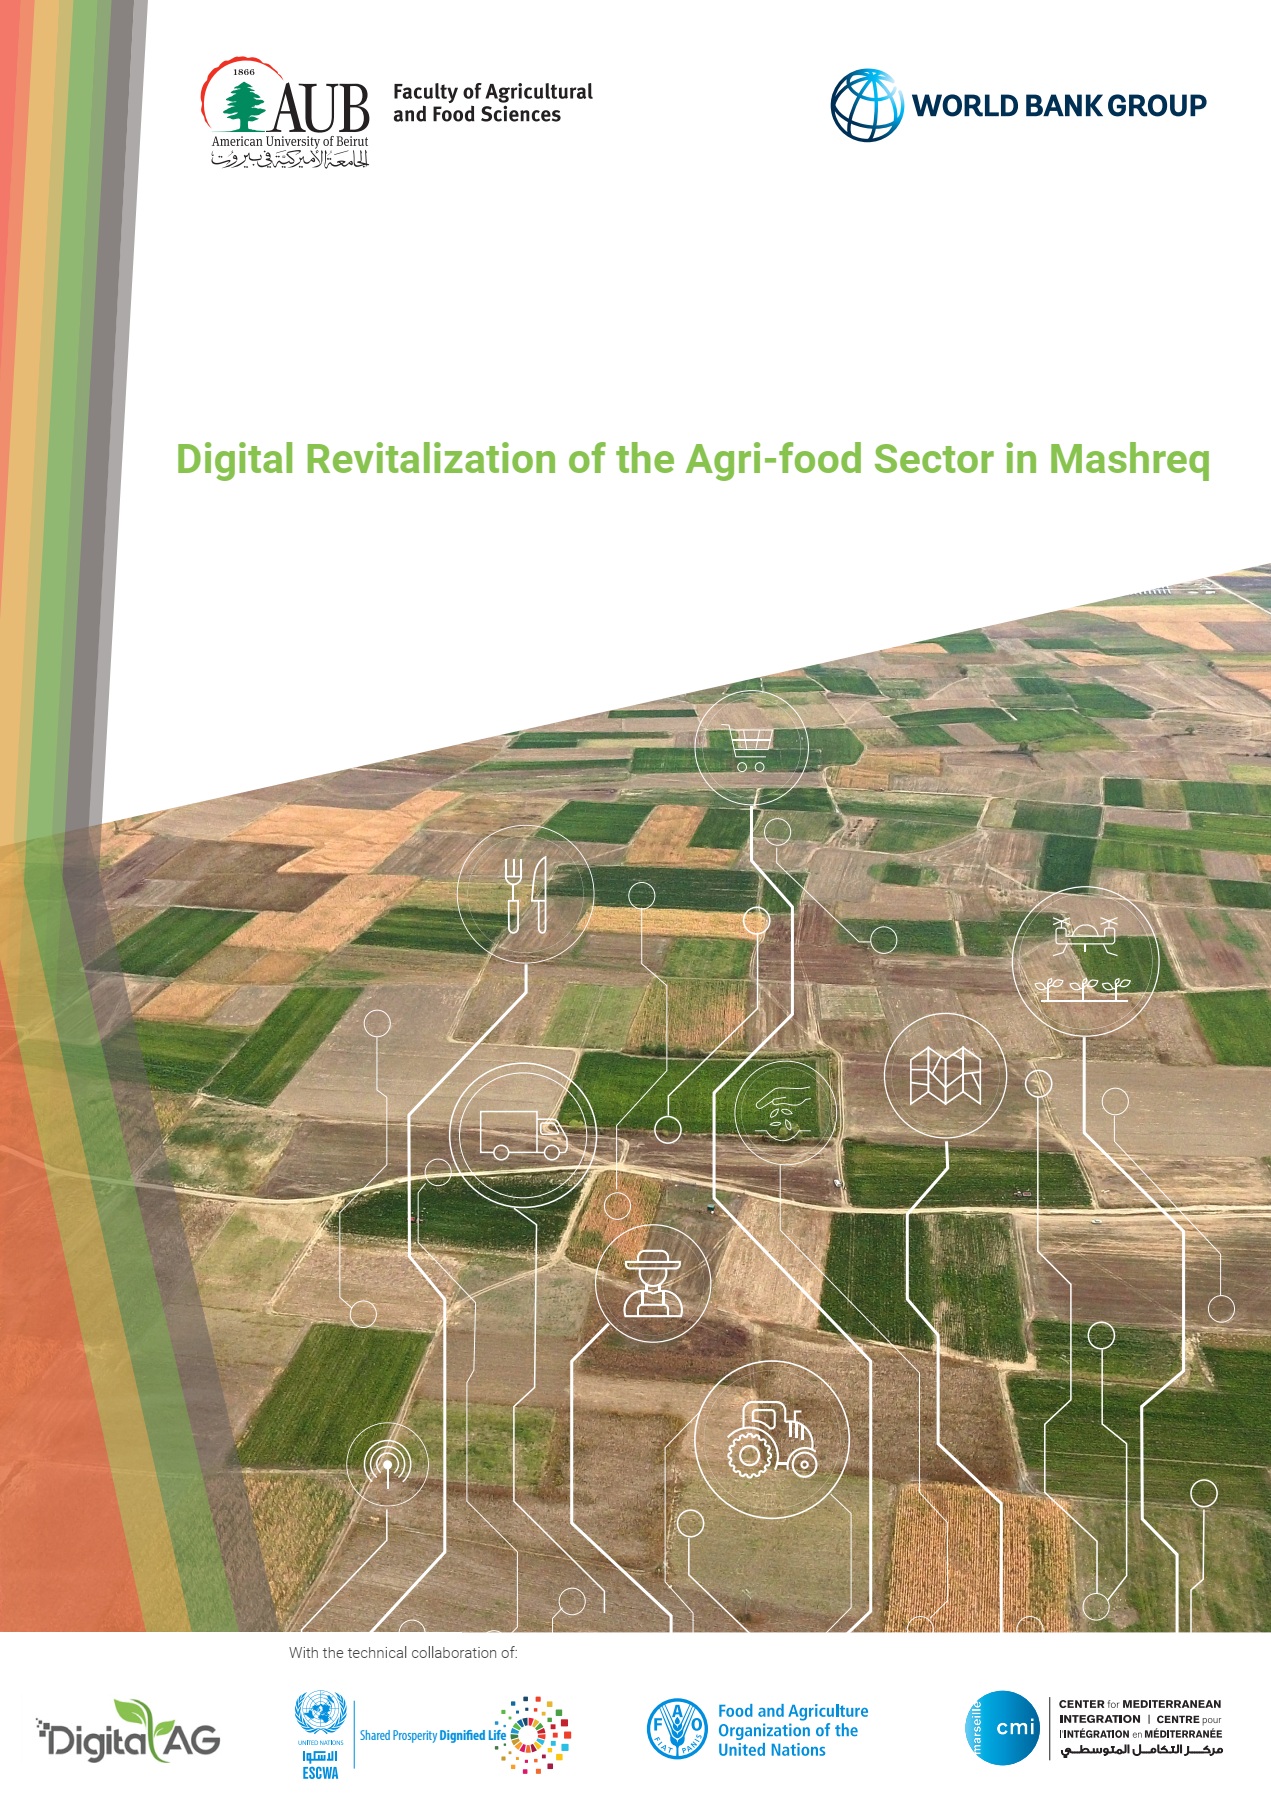 Digital revitalization of the agri-food sector in Mashreq